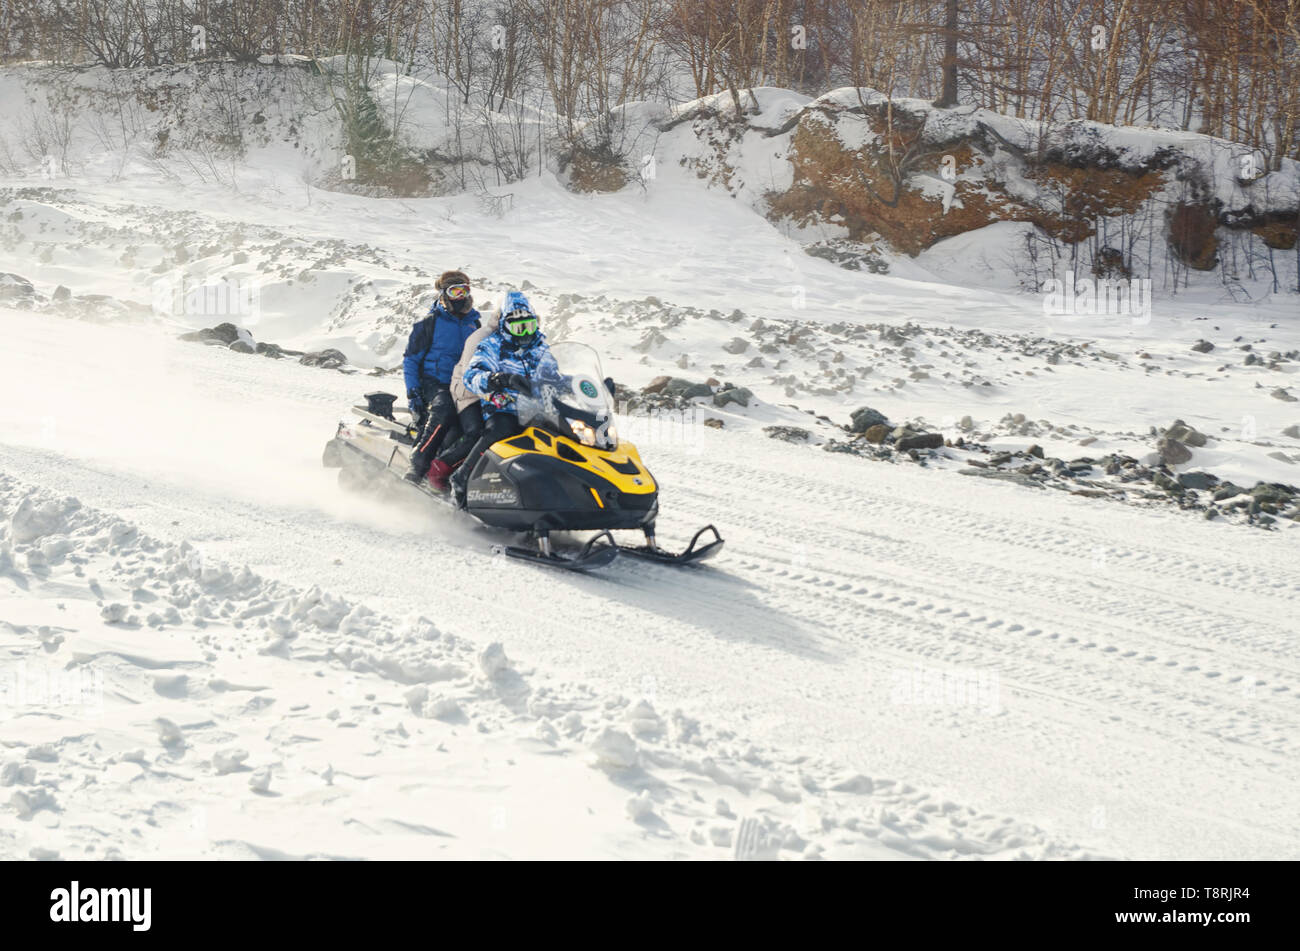 https://c8.alamy.com/comp/T8RJR4/tourist-rides-snow-motor-sled-in-changbai-mountain-scenic-area-T8RJR4.jpg